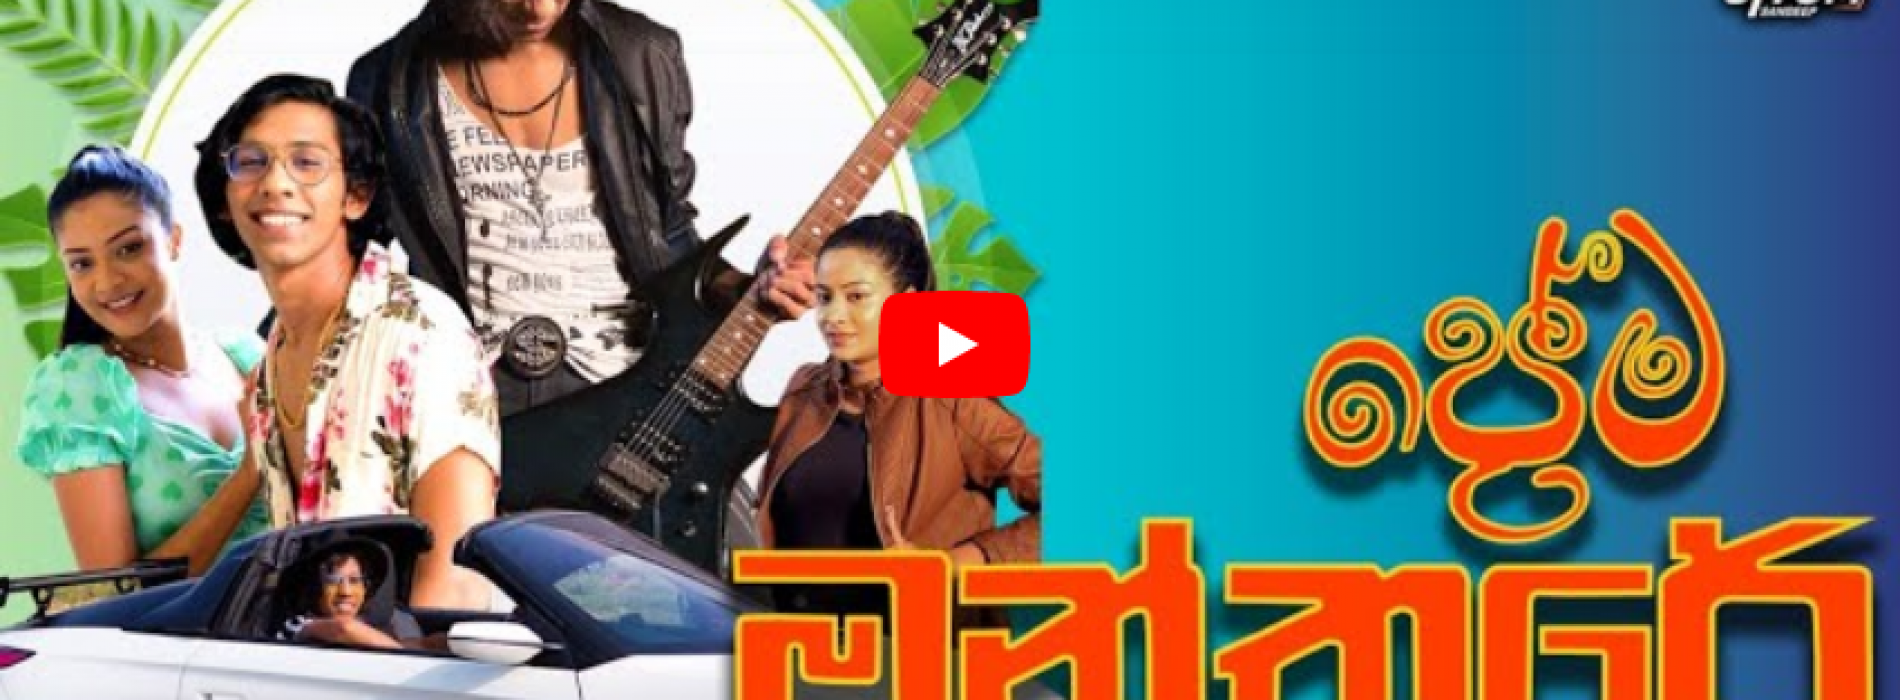 New Music : Siyum Sandeep 🎩 | ප්‍රේම මන්තරේ ( Prema Manthare ) | Official Music Video